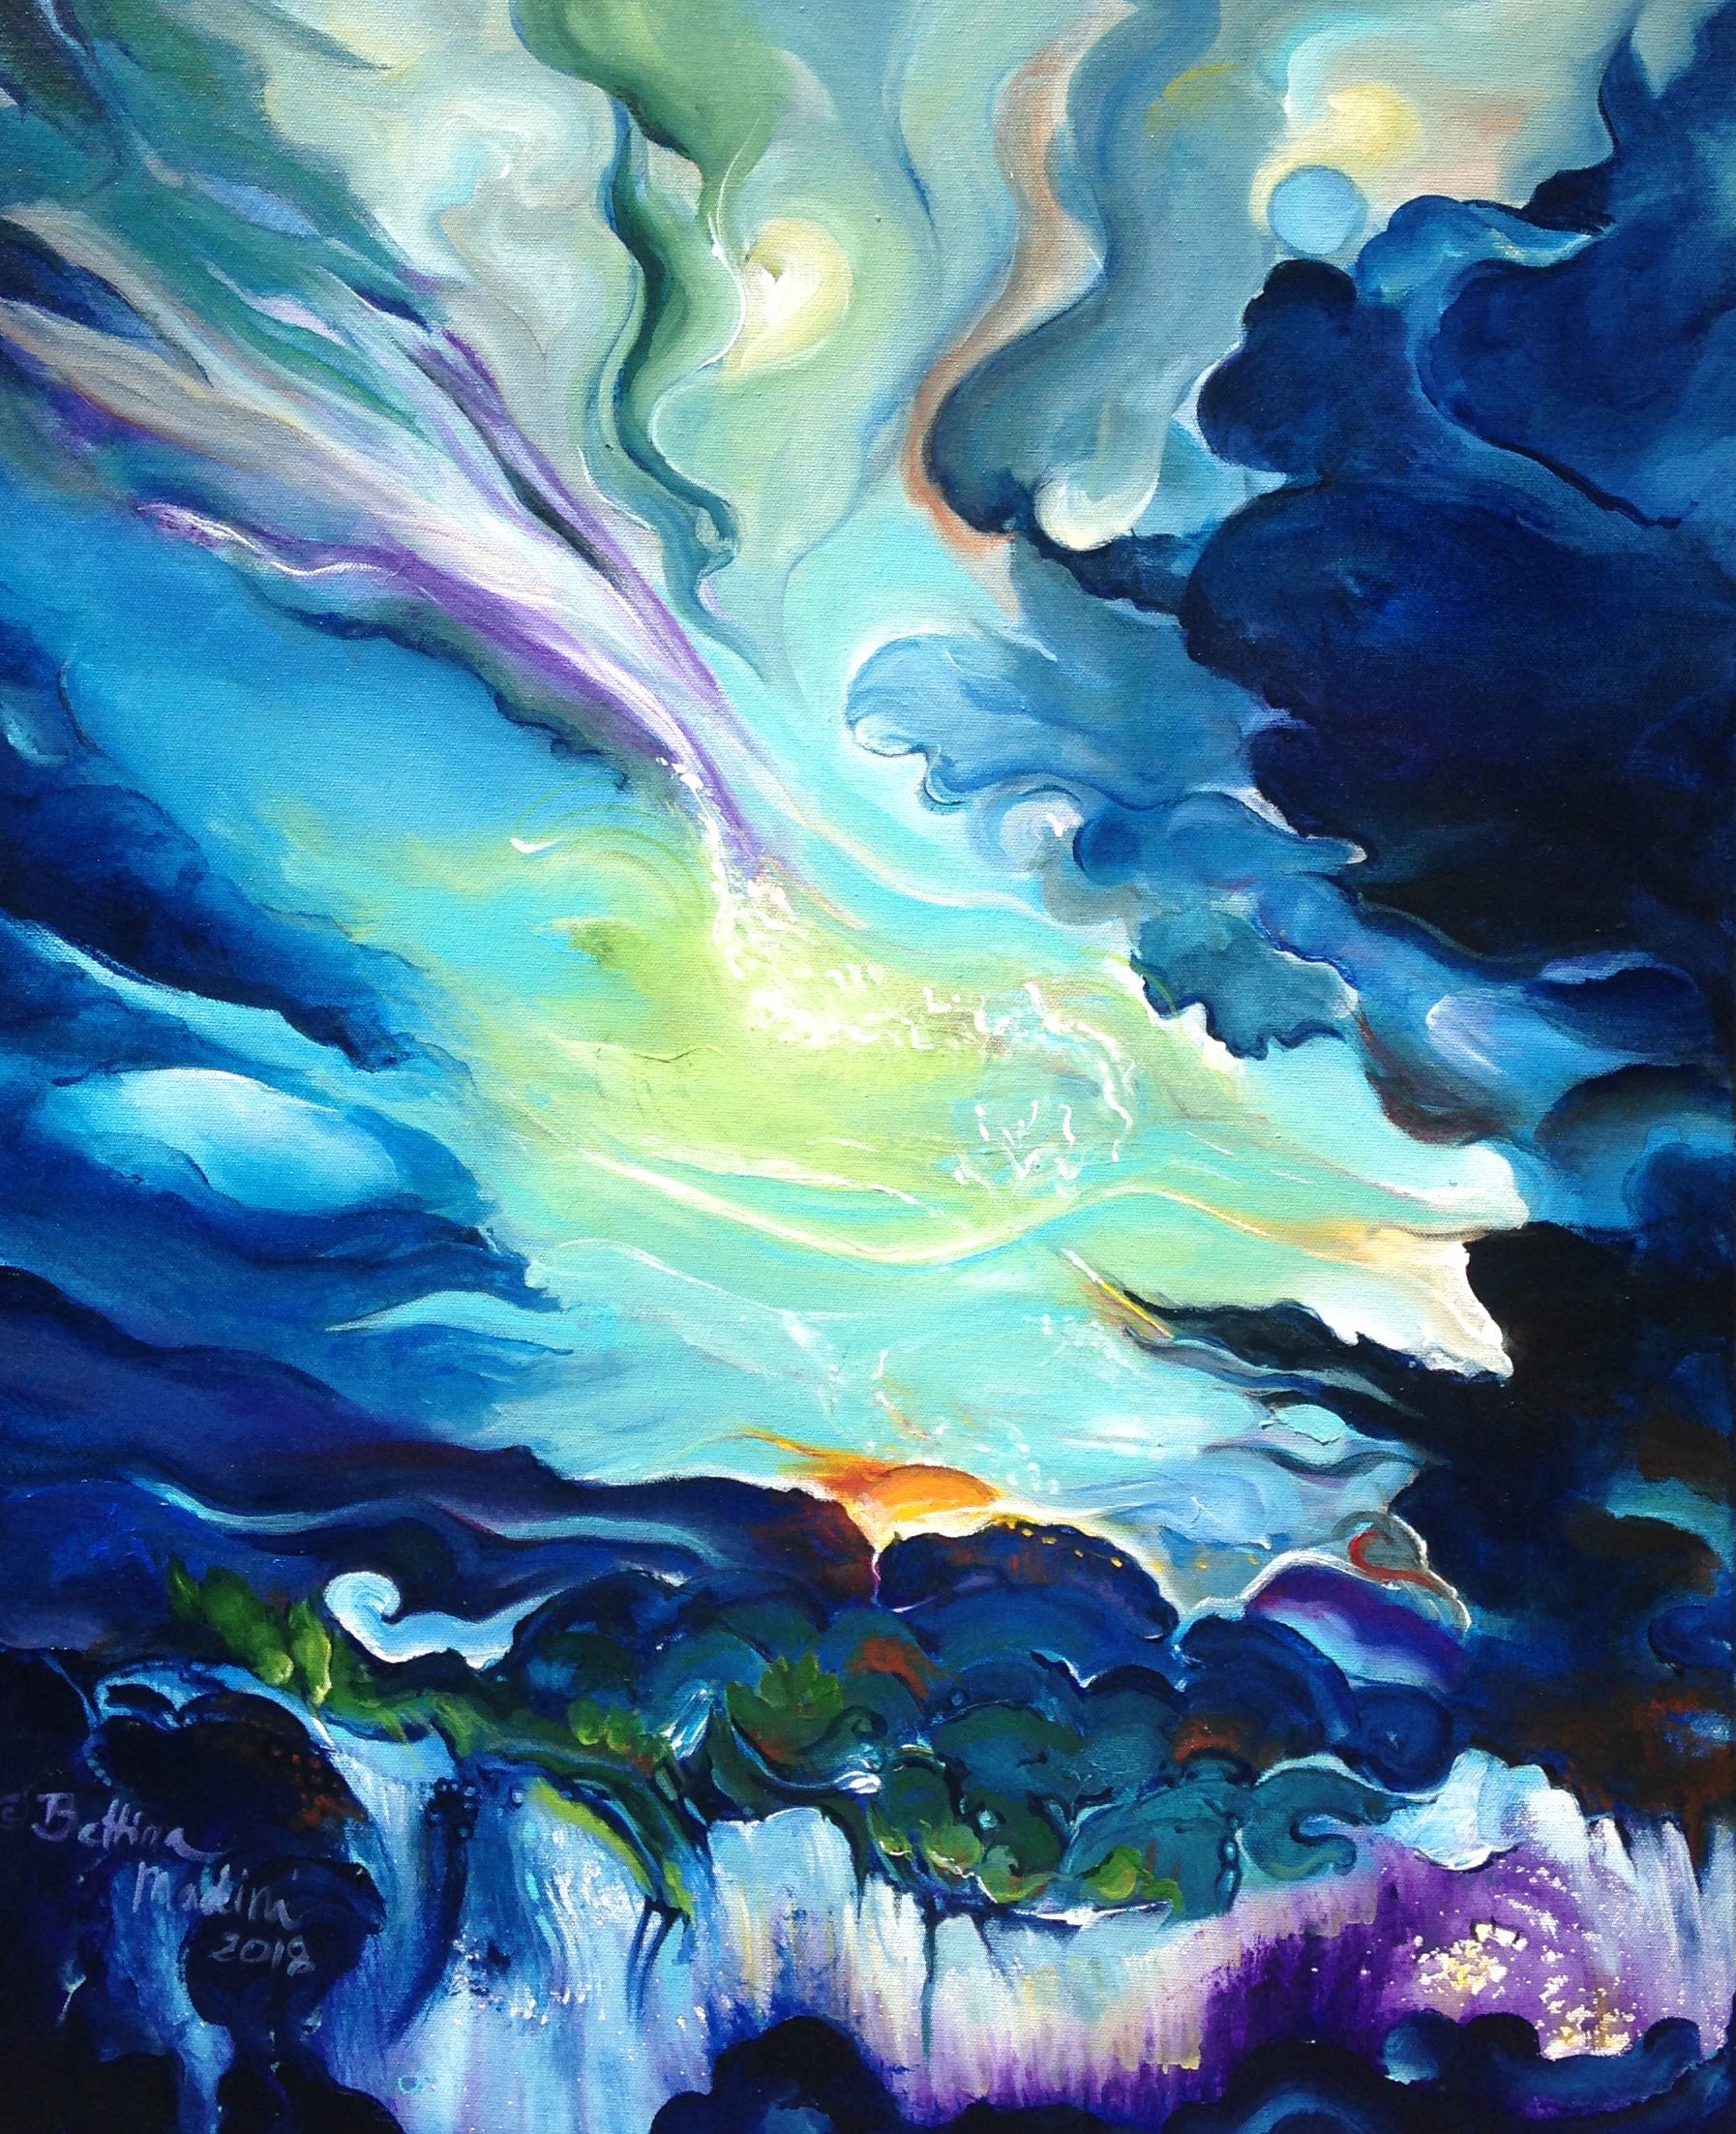 Earth sky creation by bettina madini acrylic on canvas 24x20 xjh0ry